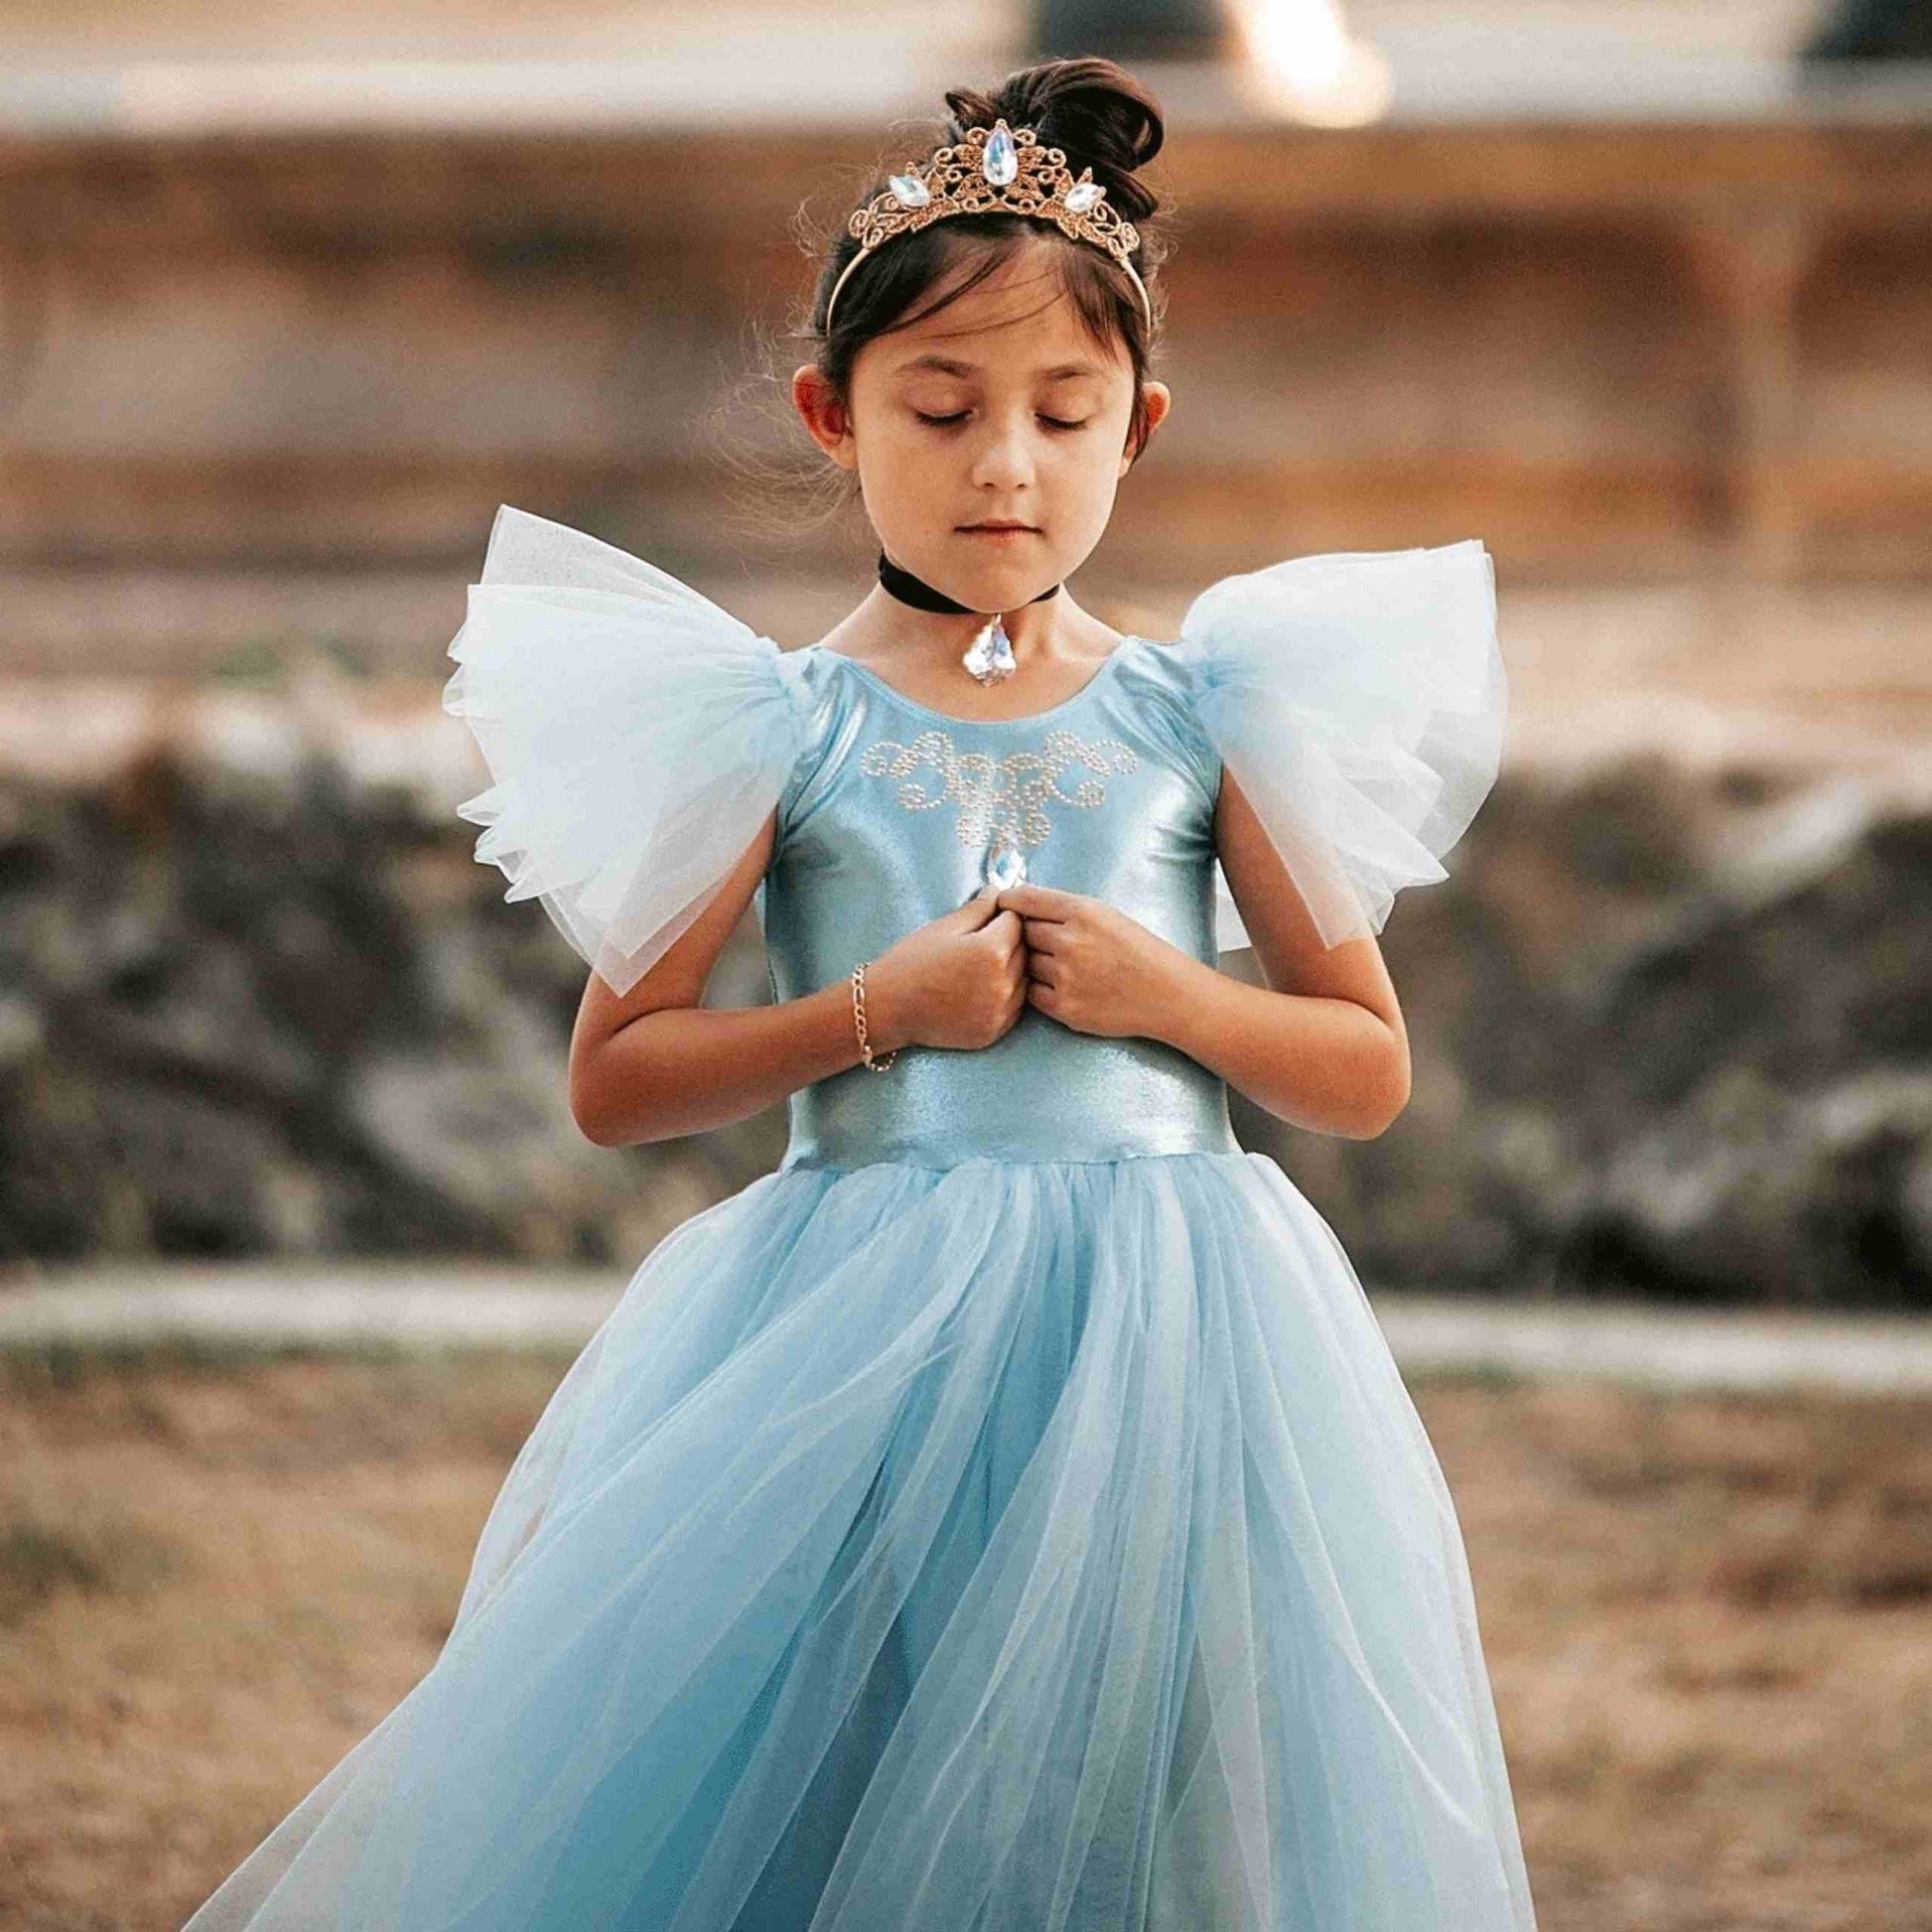 a little girl wearing a blue dress and a tiara